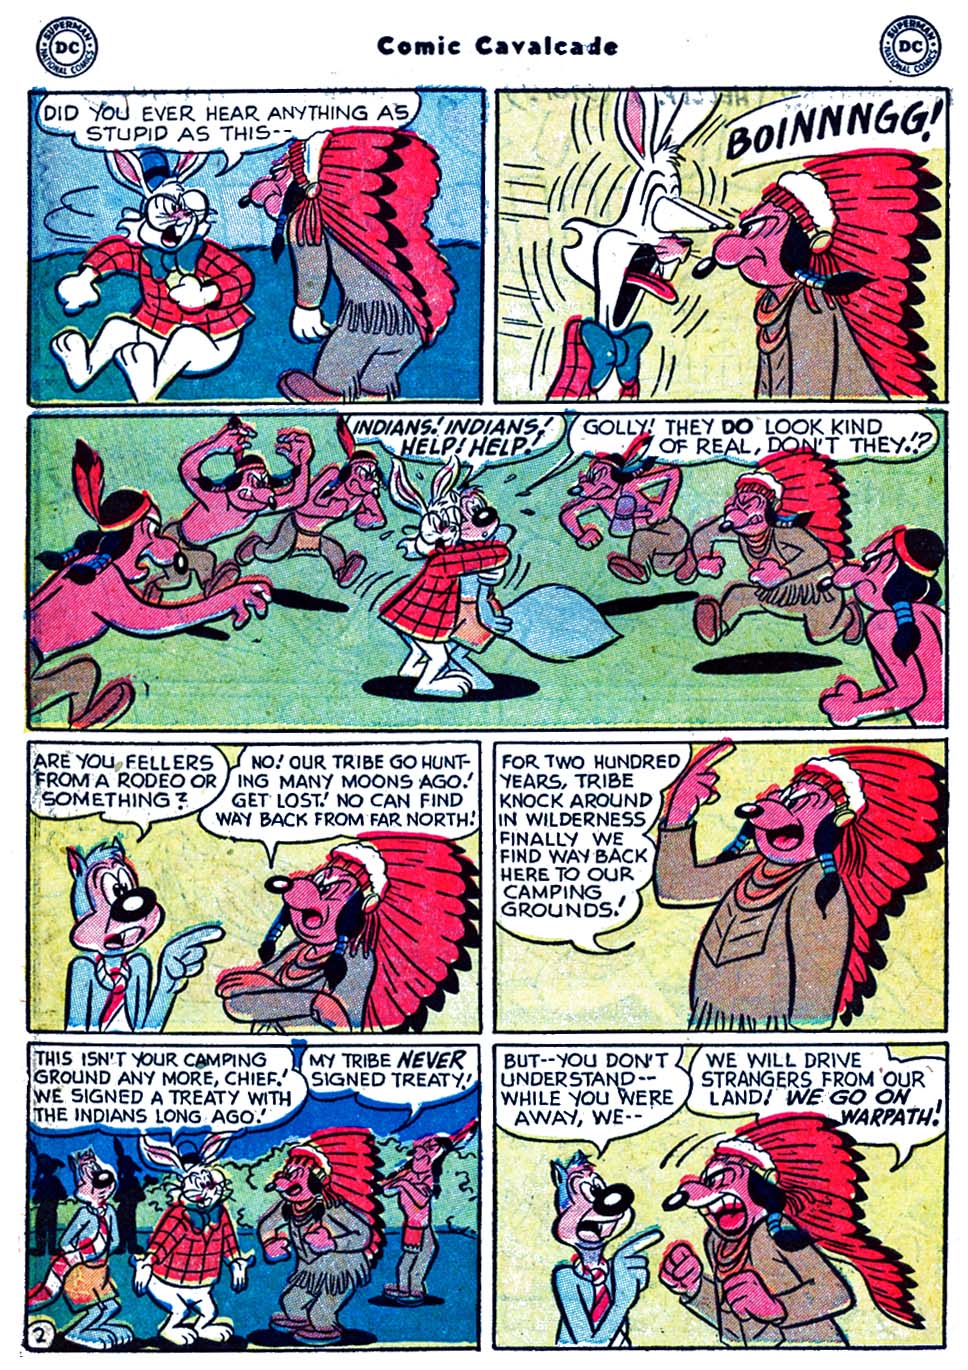 Comic Cavalcade issue 55 - Page 16